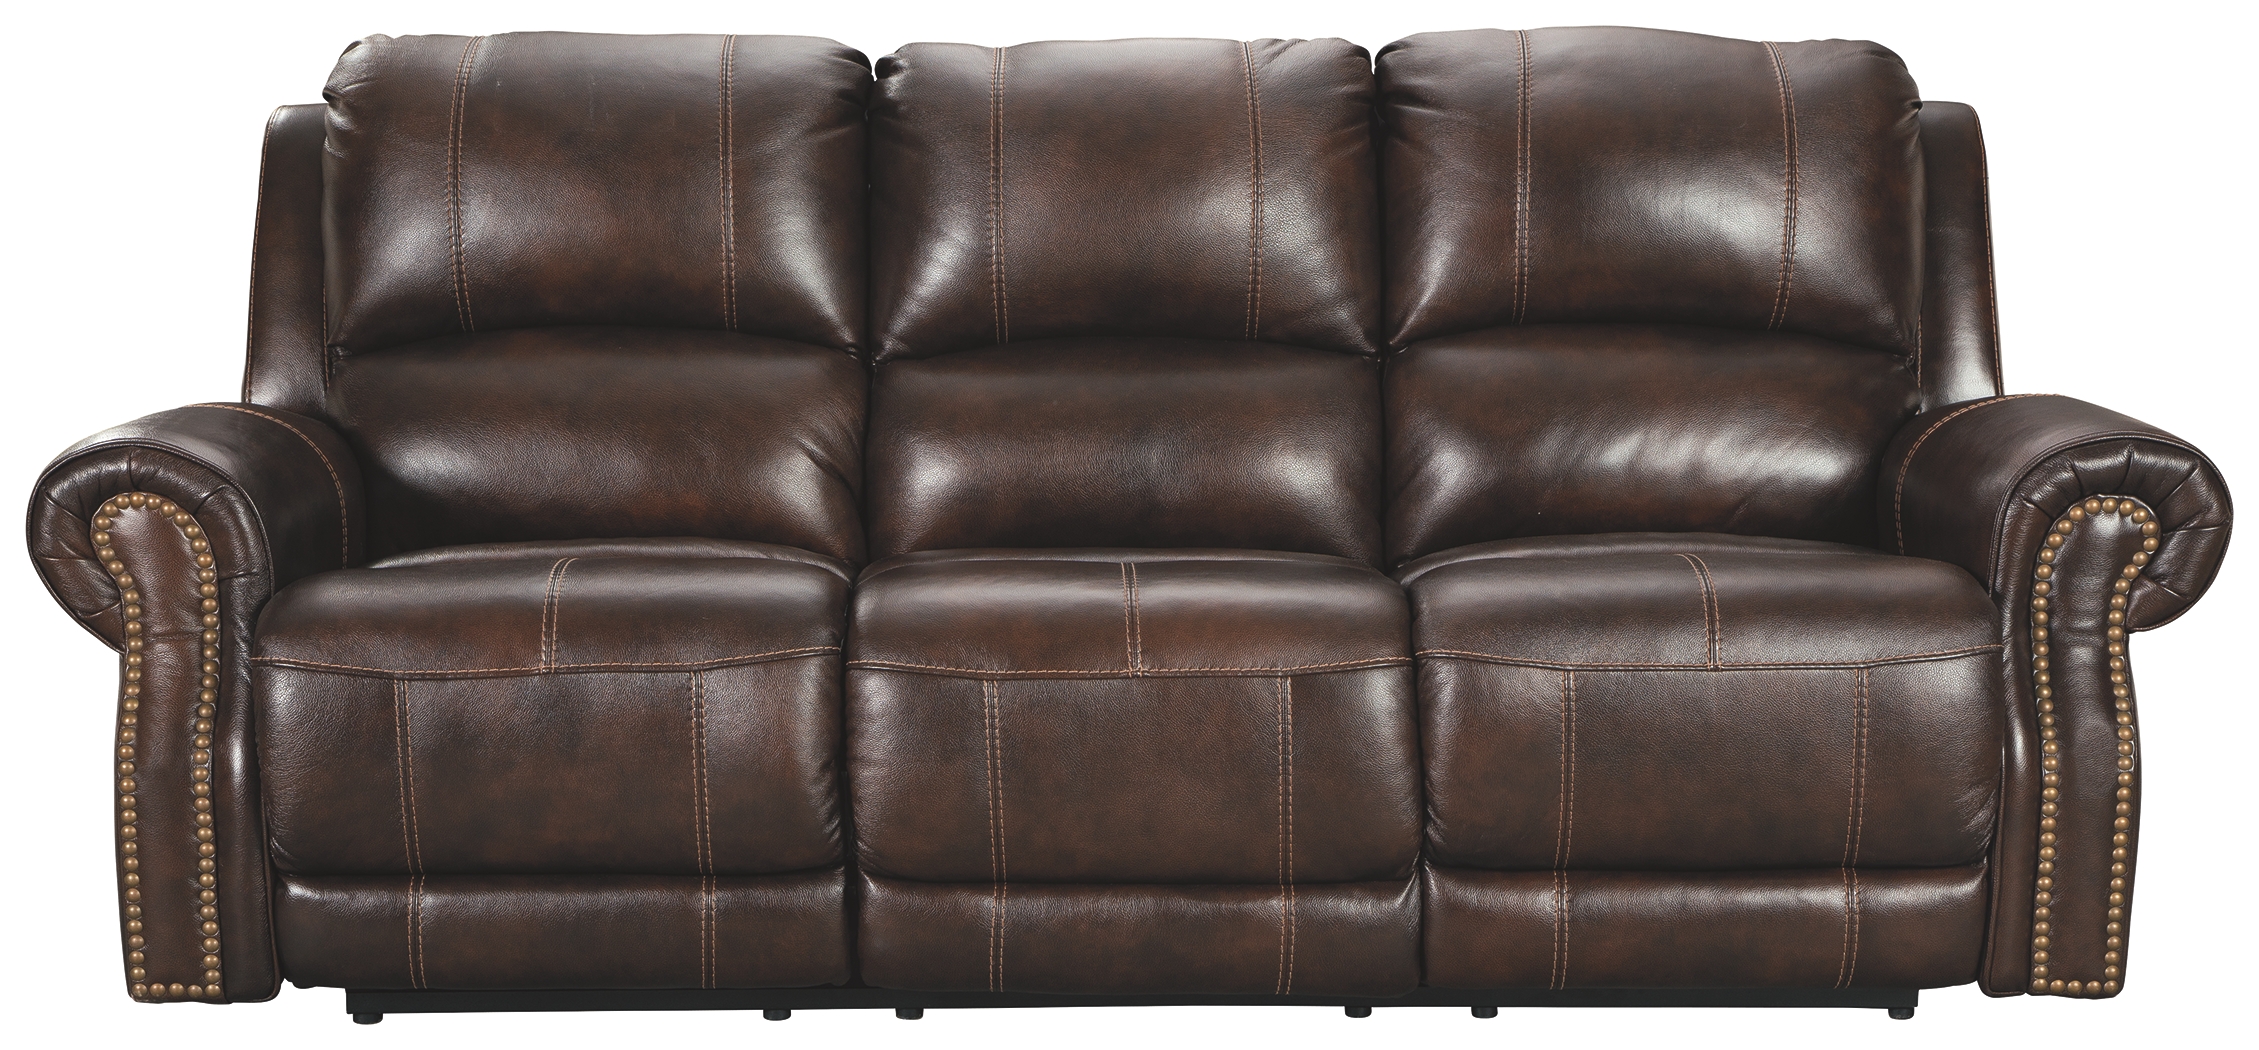 Signature Design by Ashley® Buncrana Chocolate Power Reclining Sofa with Adjustable Headrest